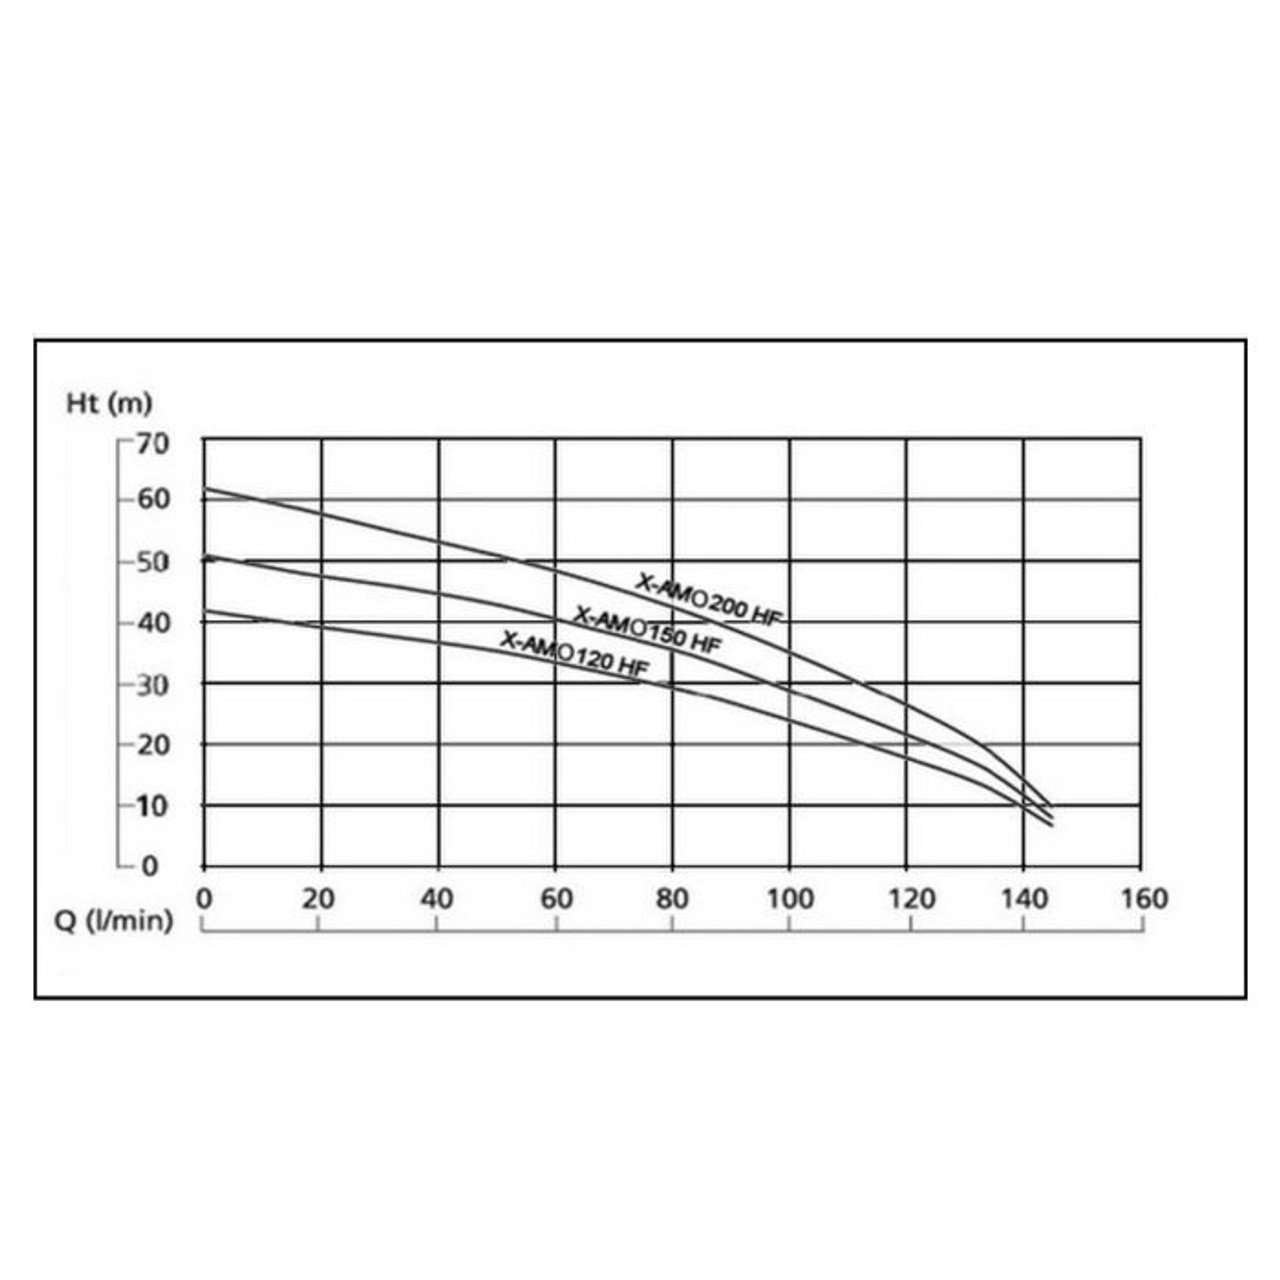 Performance Charts for the X-AMO1204BHF, X-AMO1505BHF  and X-AMO2006HF SteelPumps